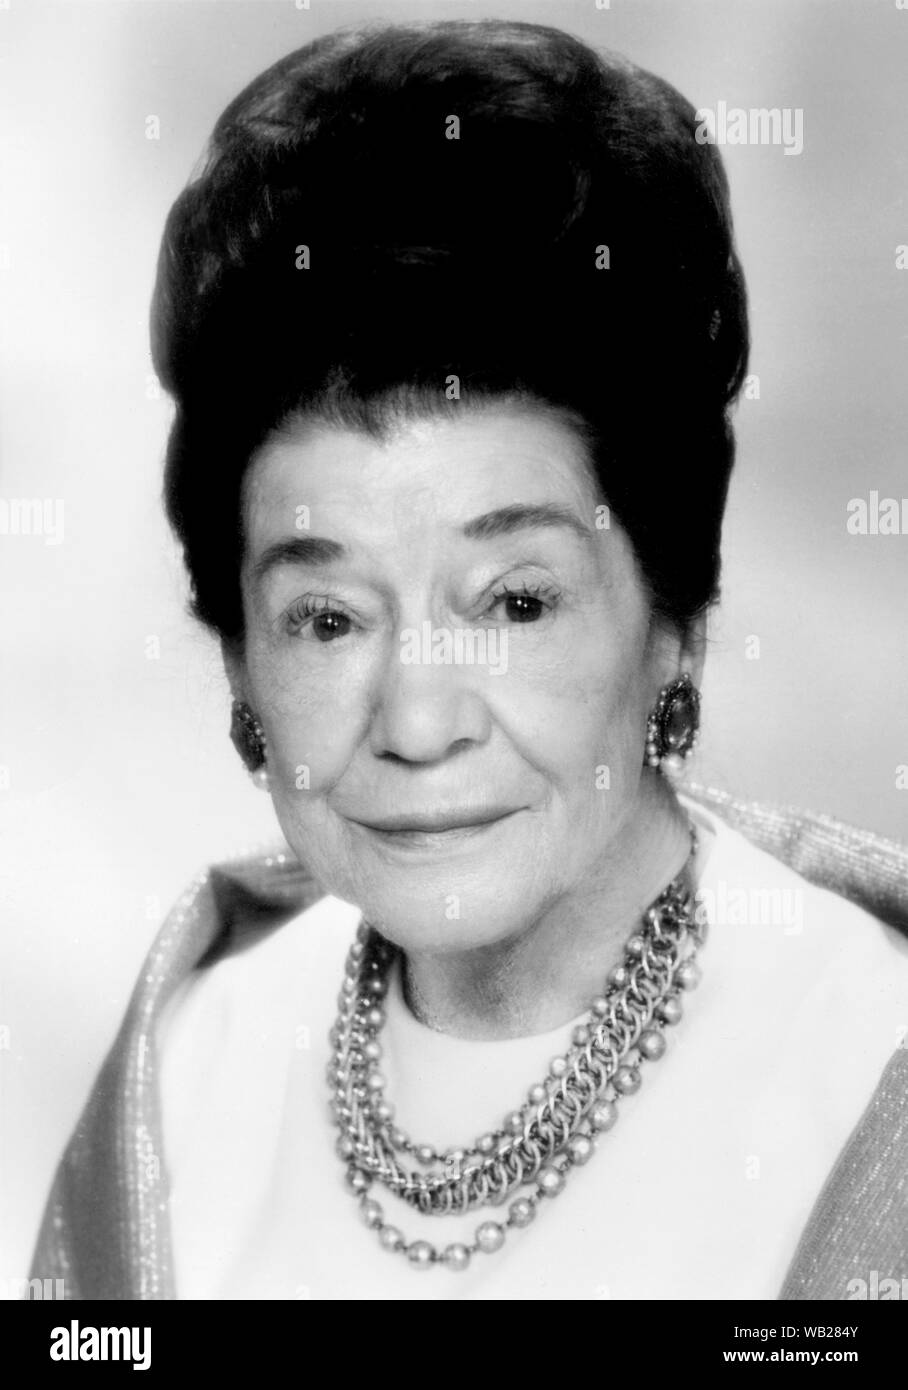 Silent Film Actress Minta Durfee Arbuckle, Publicity Portrait, 1970's Stock Photo